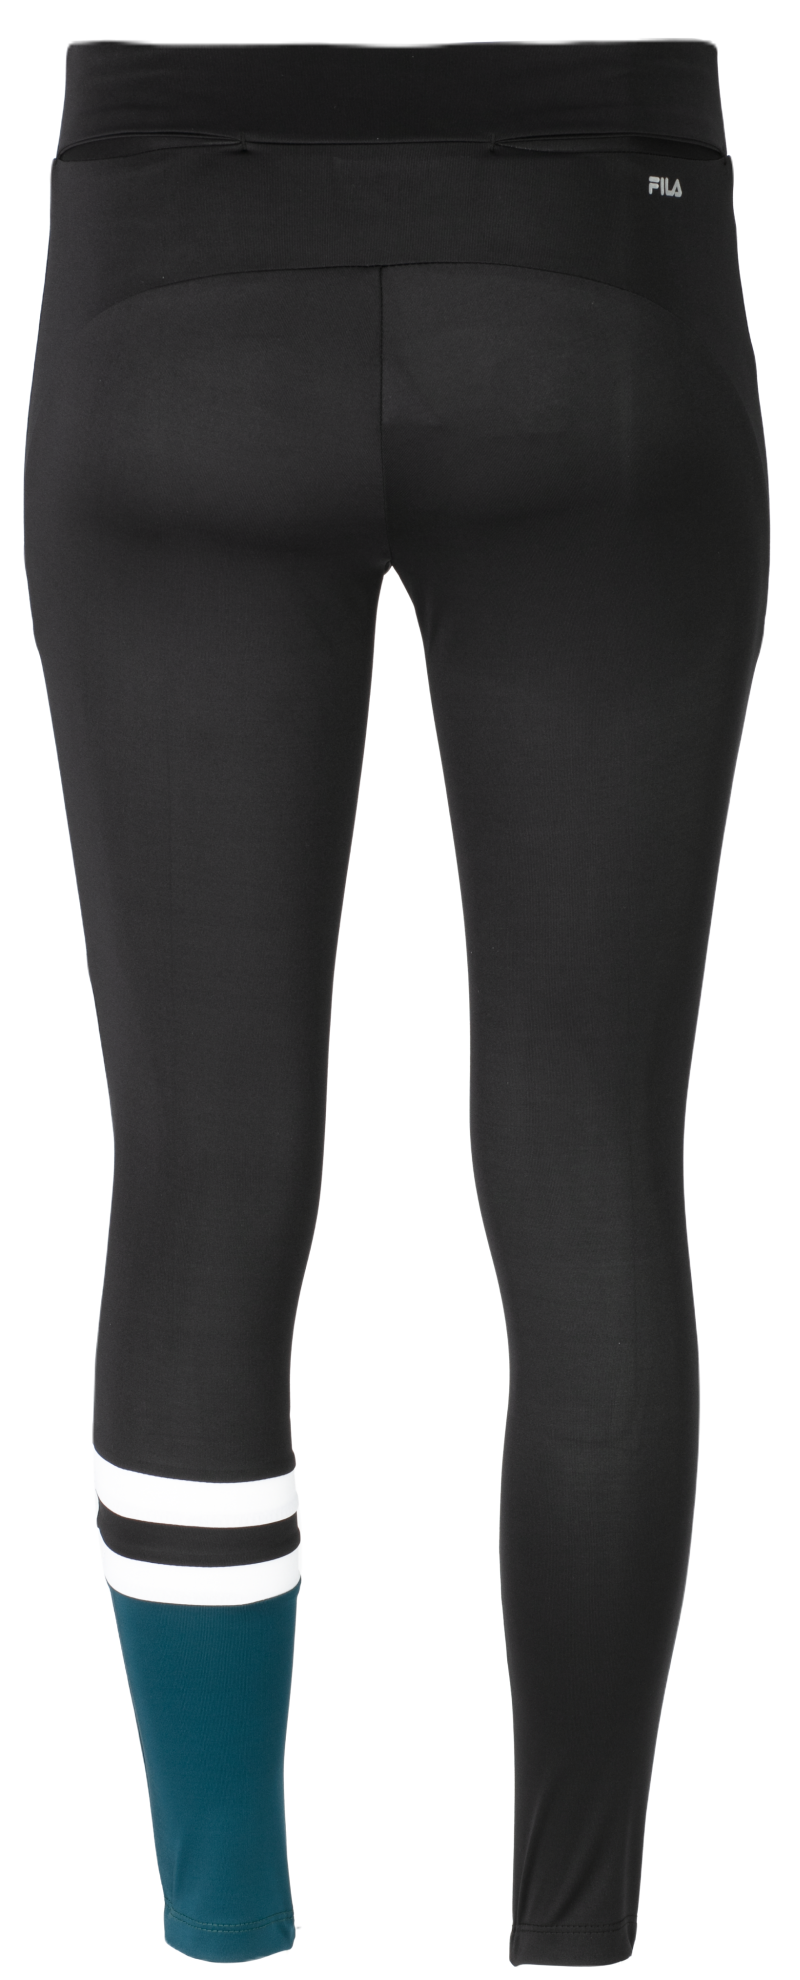 Women's leggings Fila Leggings Erica - black/deep teal, Tennis Zone